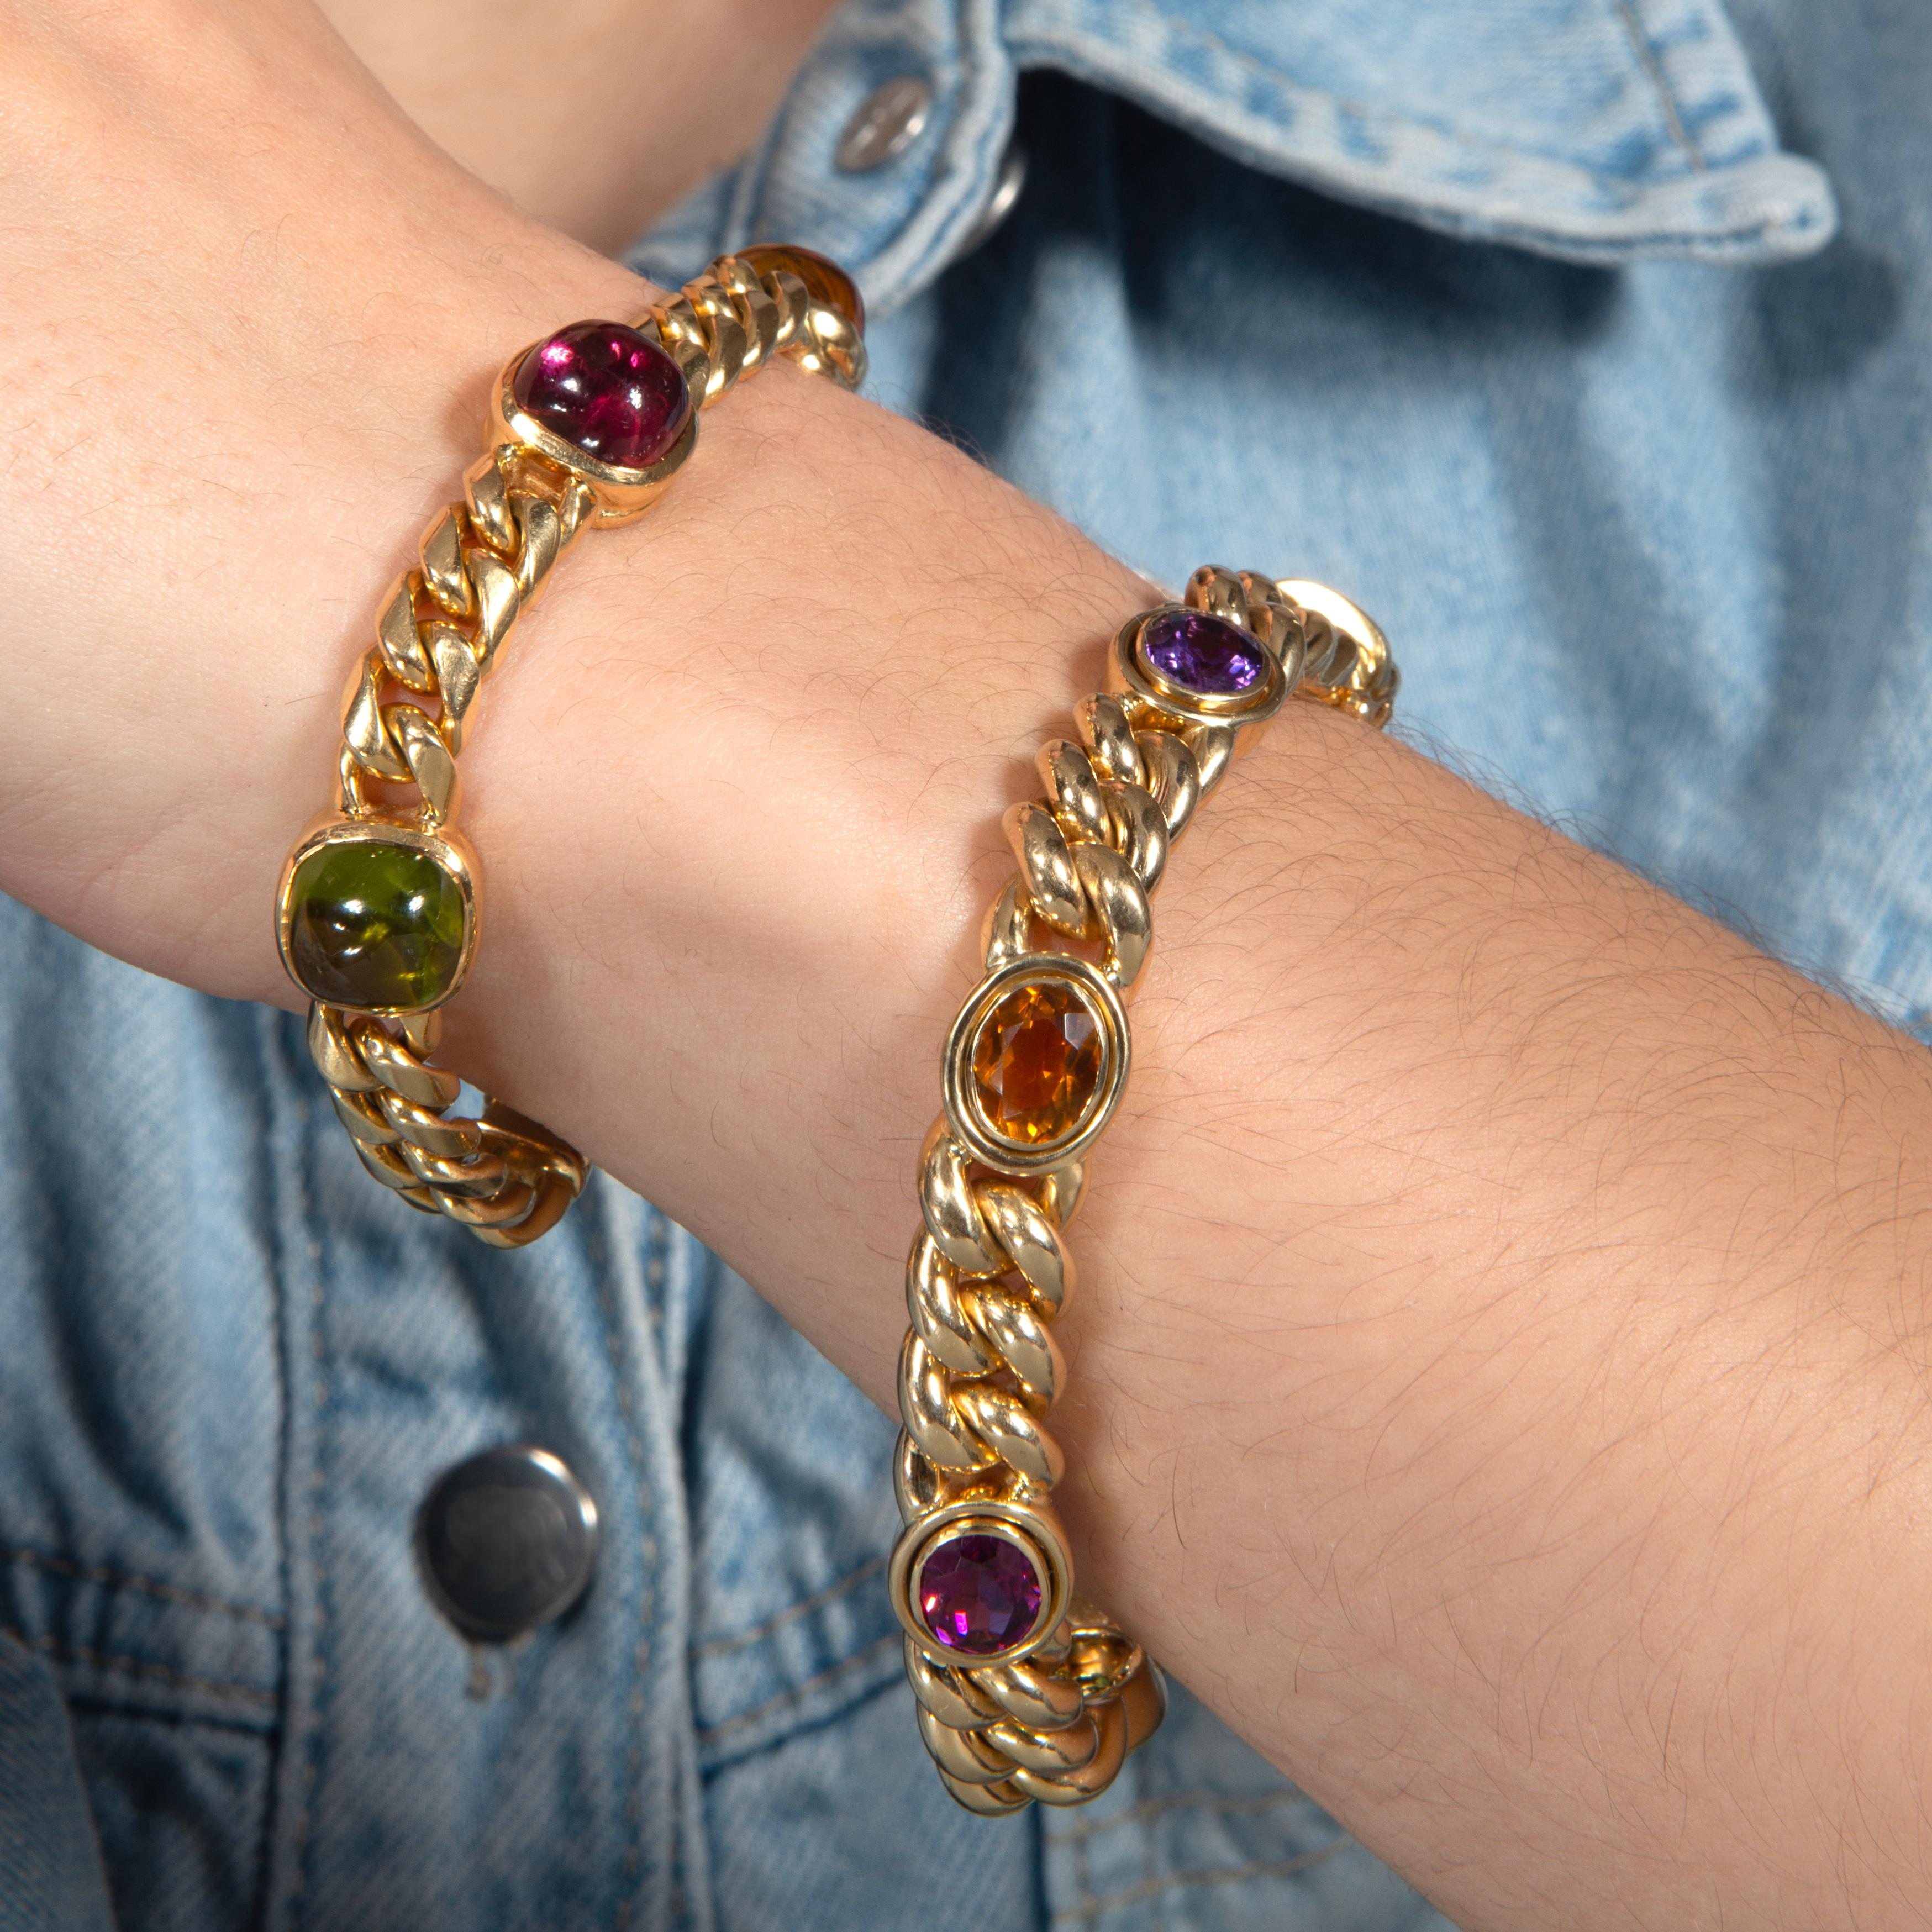 Women's or Men's Gold bracelet with gemstones For Sale